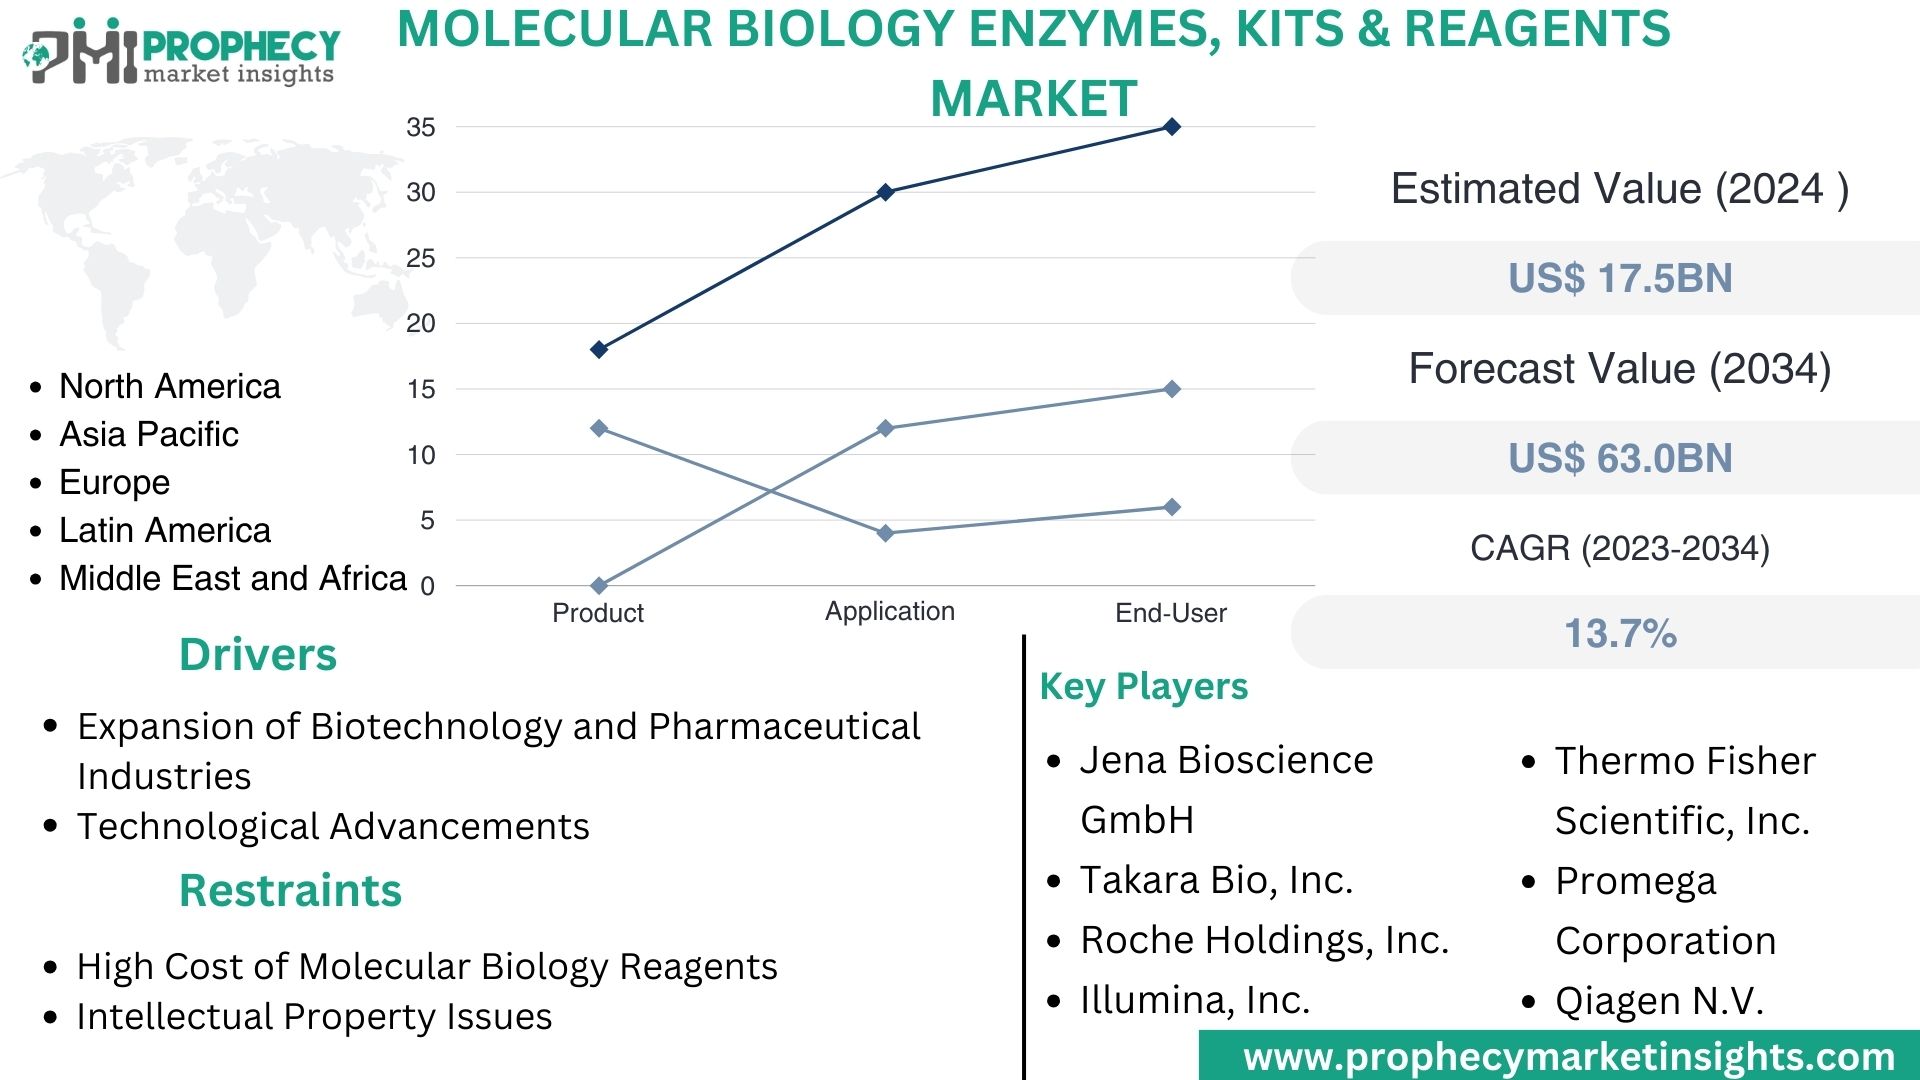 Molecular Biology Enzymes, Kits & Reagents Market